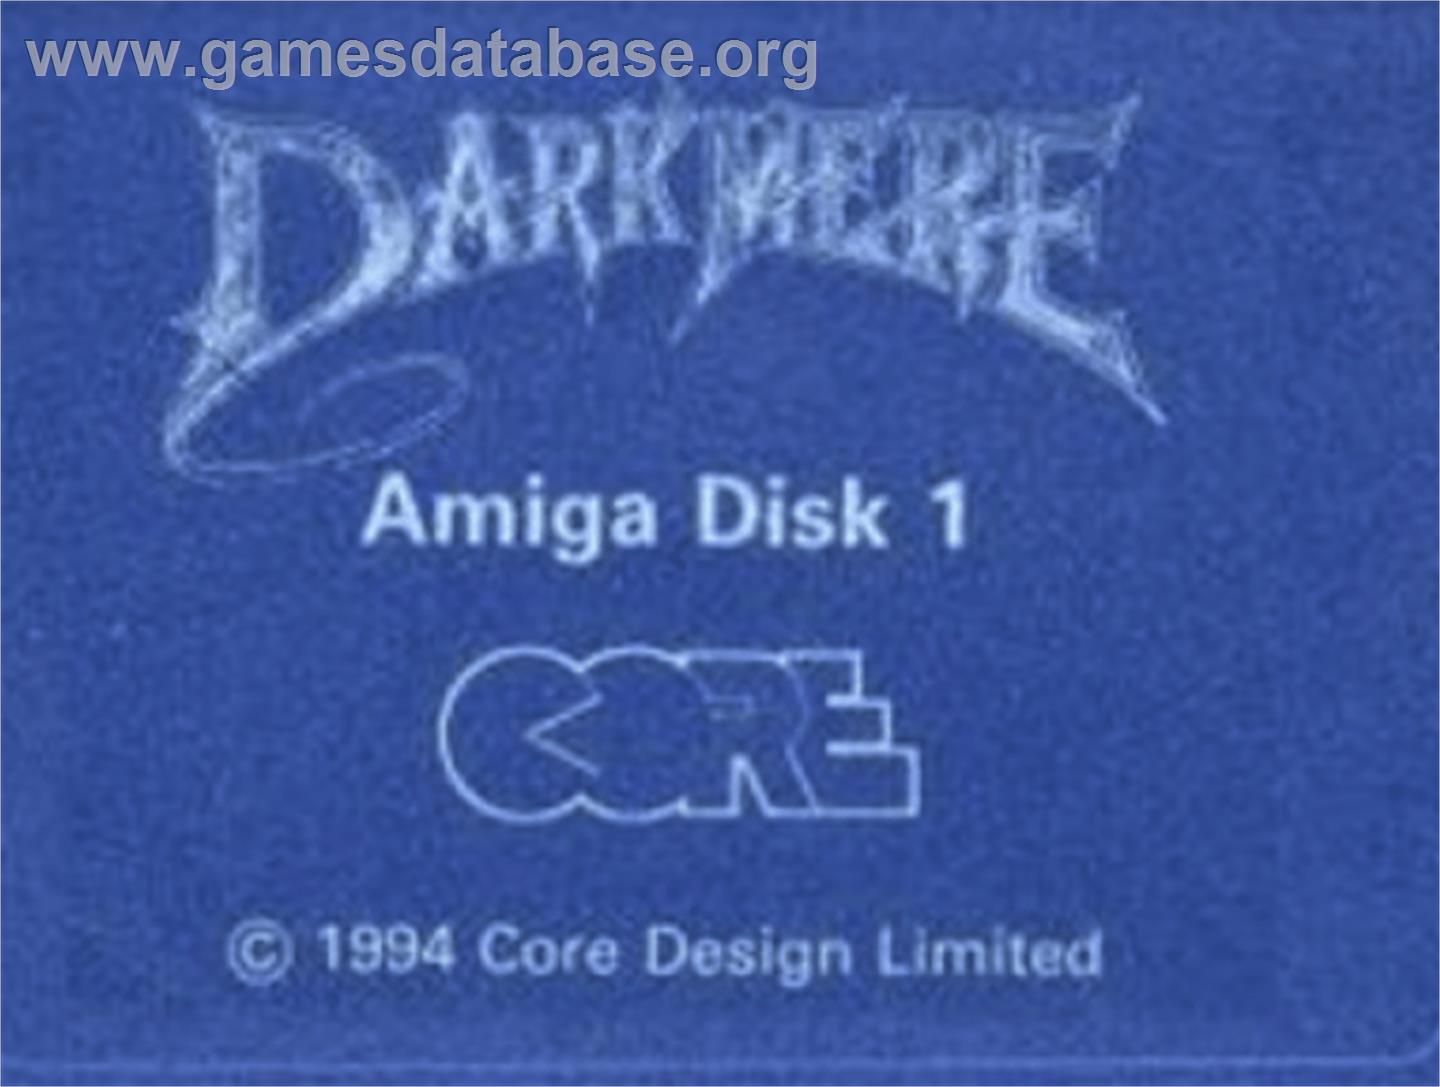 Darkmere: The Nightmare's Begun - Commodore Amiga - Artwork - Cartridge Top